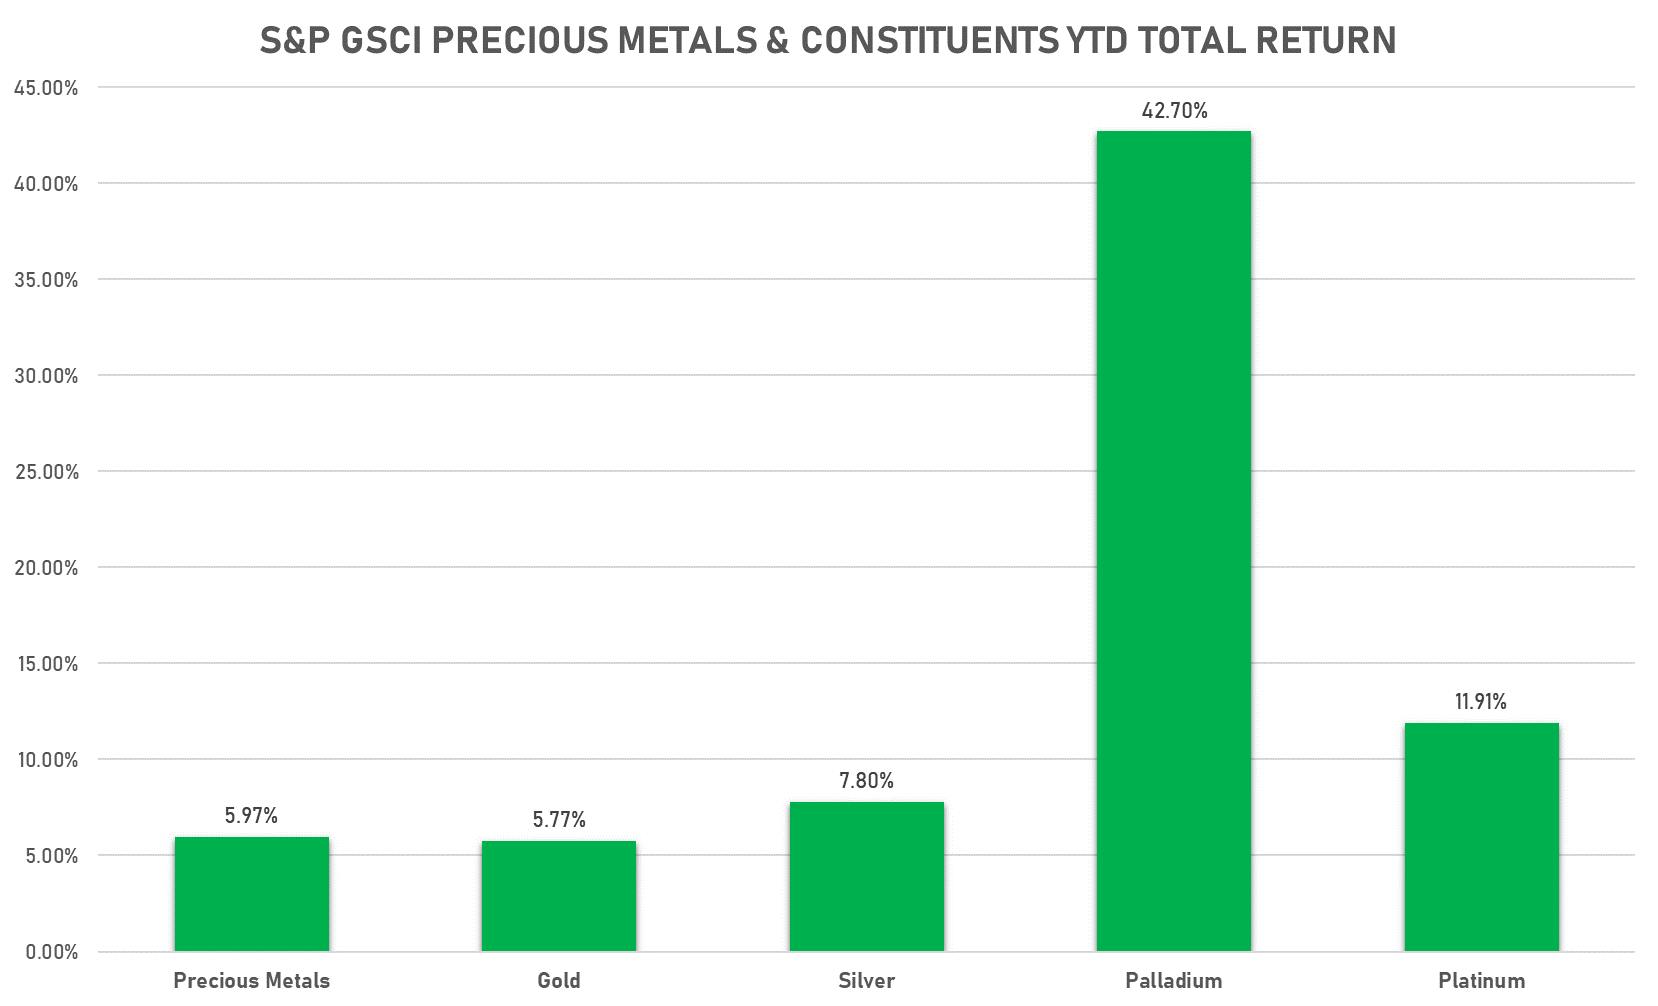 GSCI Precious Metals YTD Performance | Sources: phipost.com, FactSet data